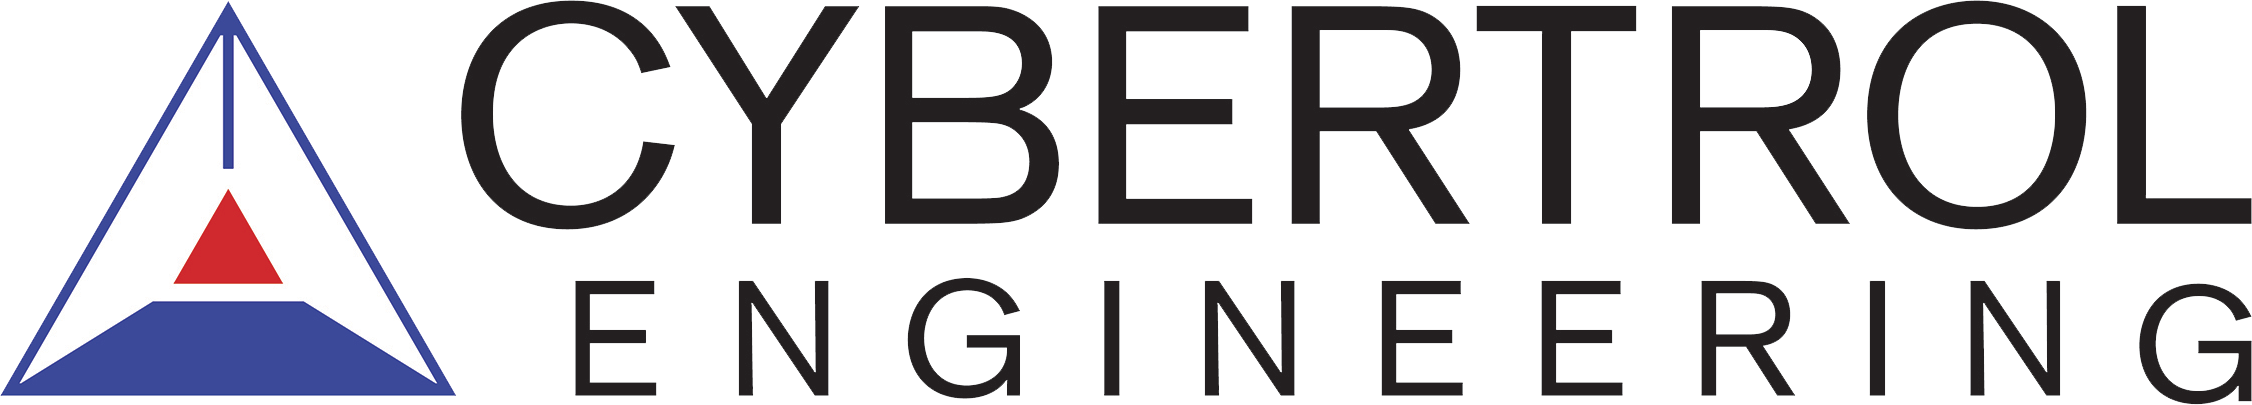 Cybertrol Engineering logo